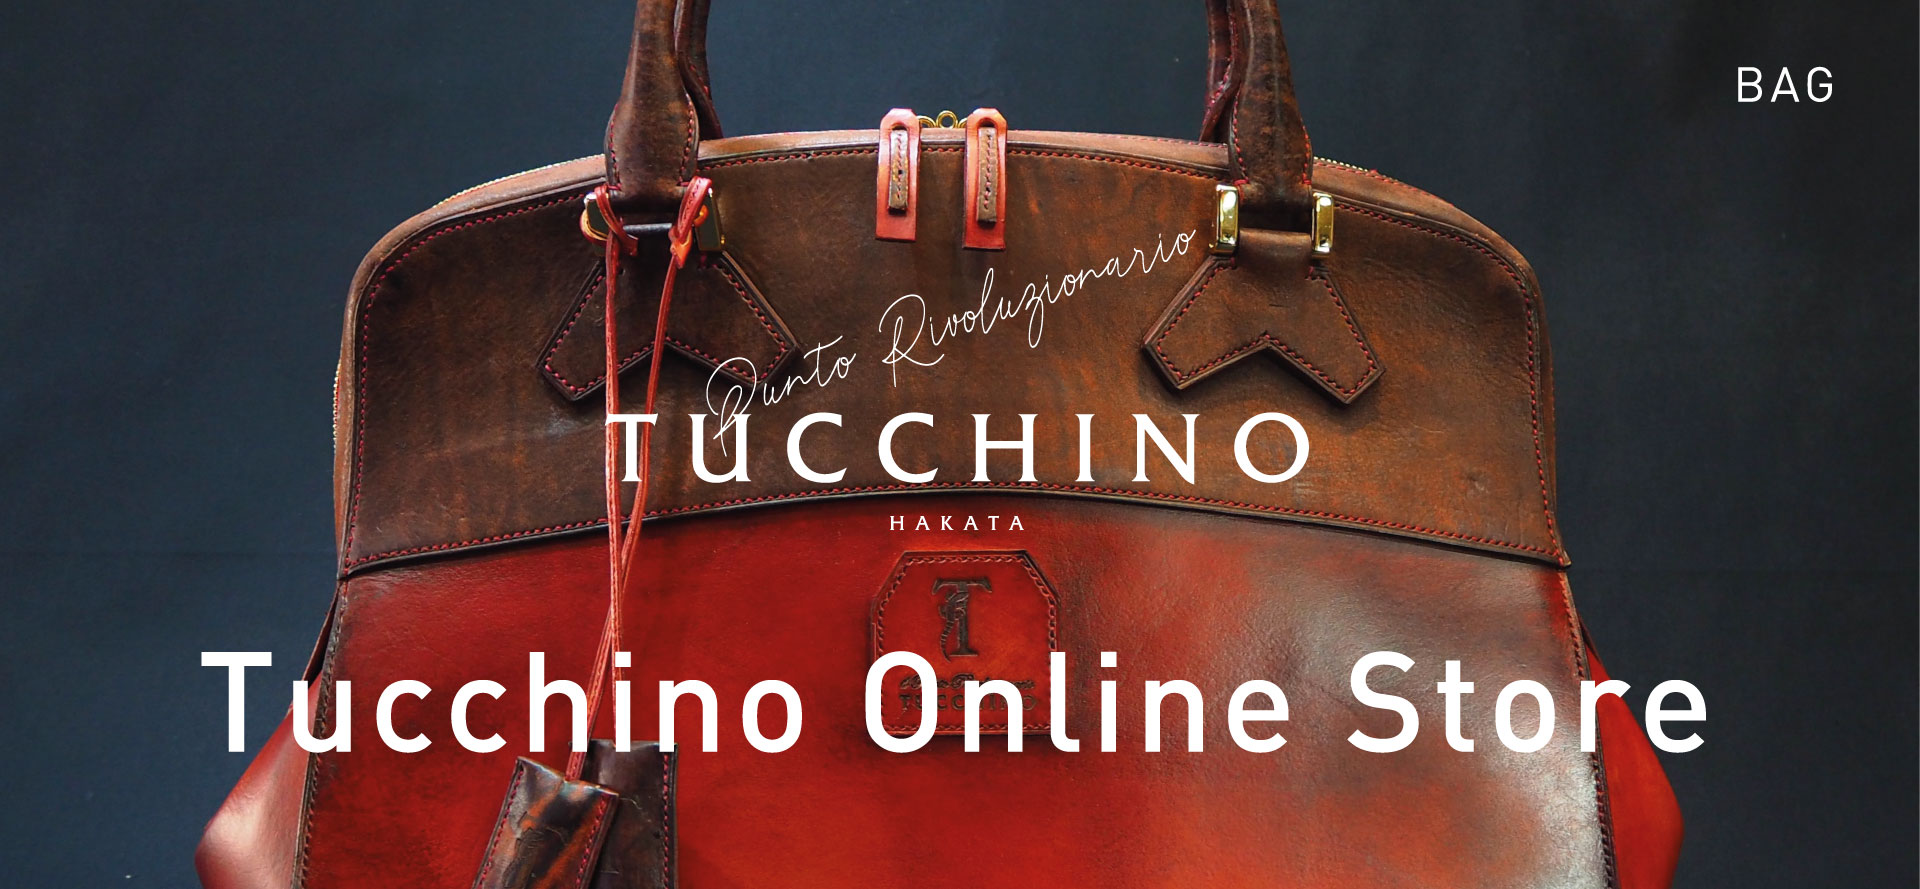 TUCCHINO 最高級手縫いバッグ ツキーノ - トートバッグ